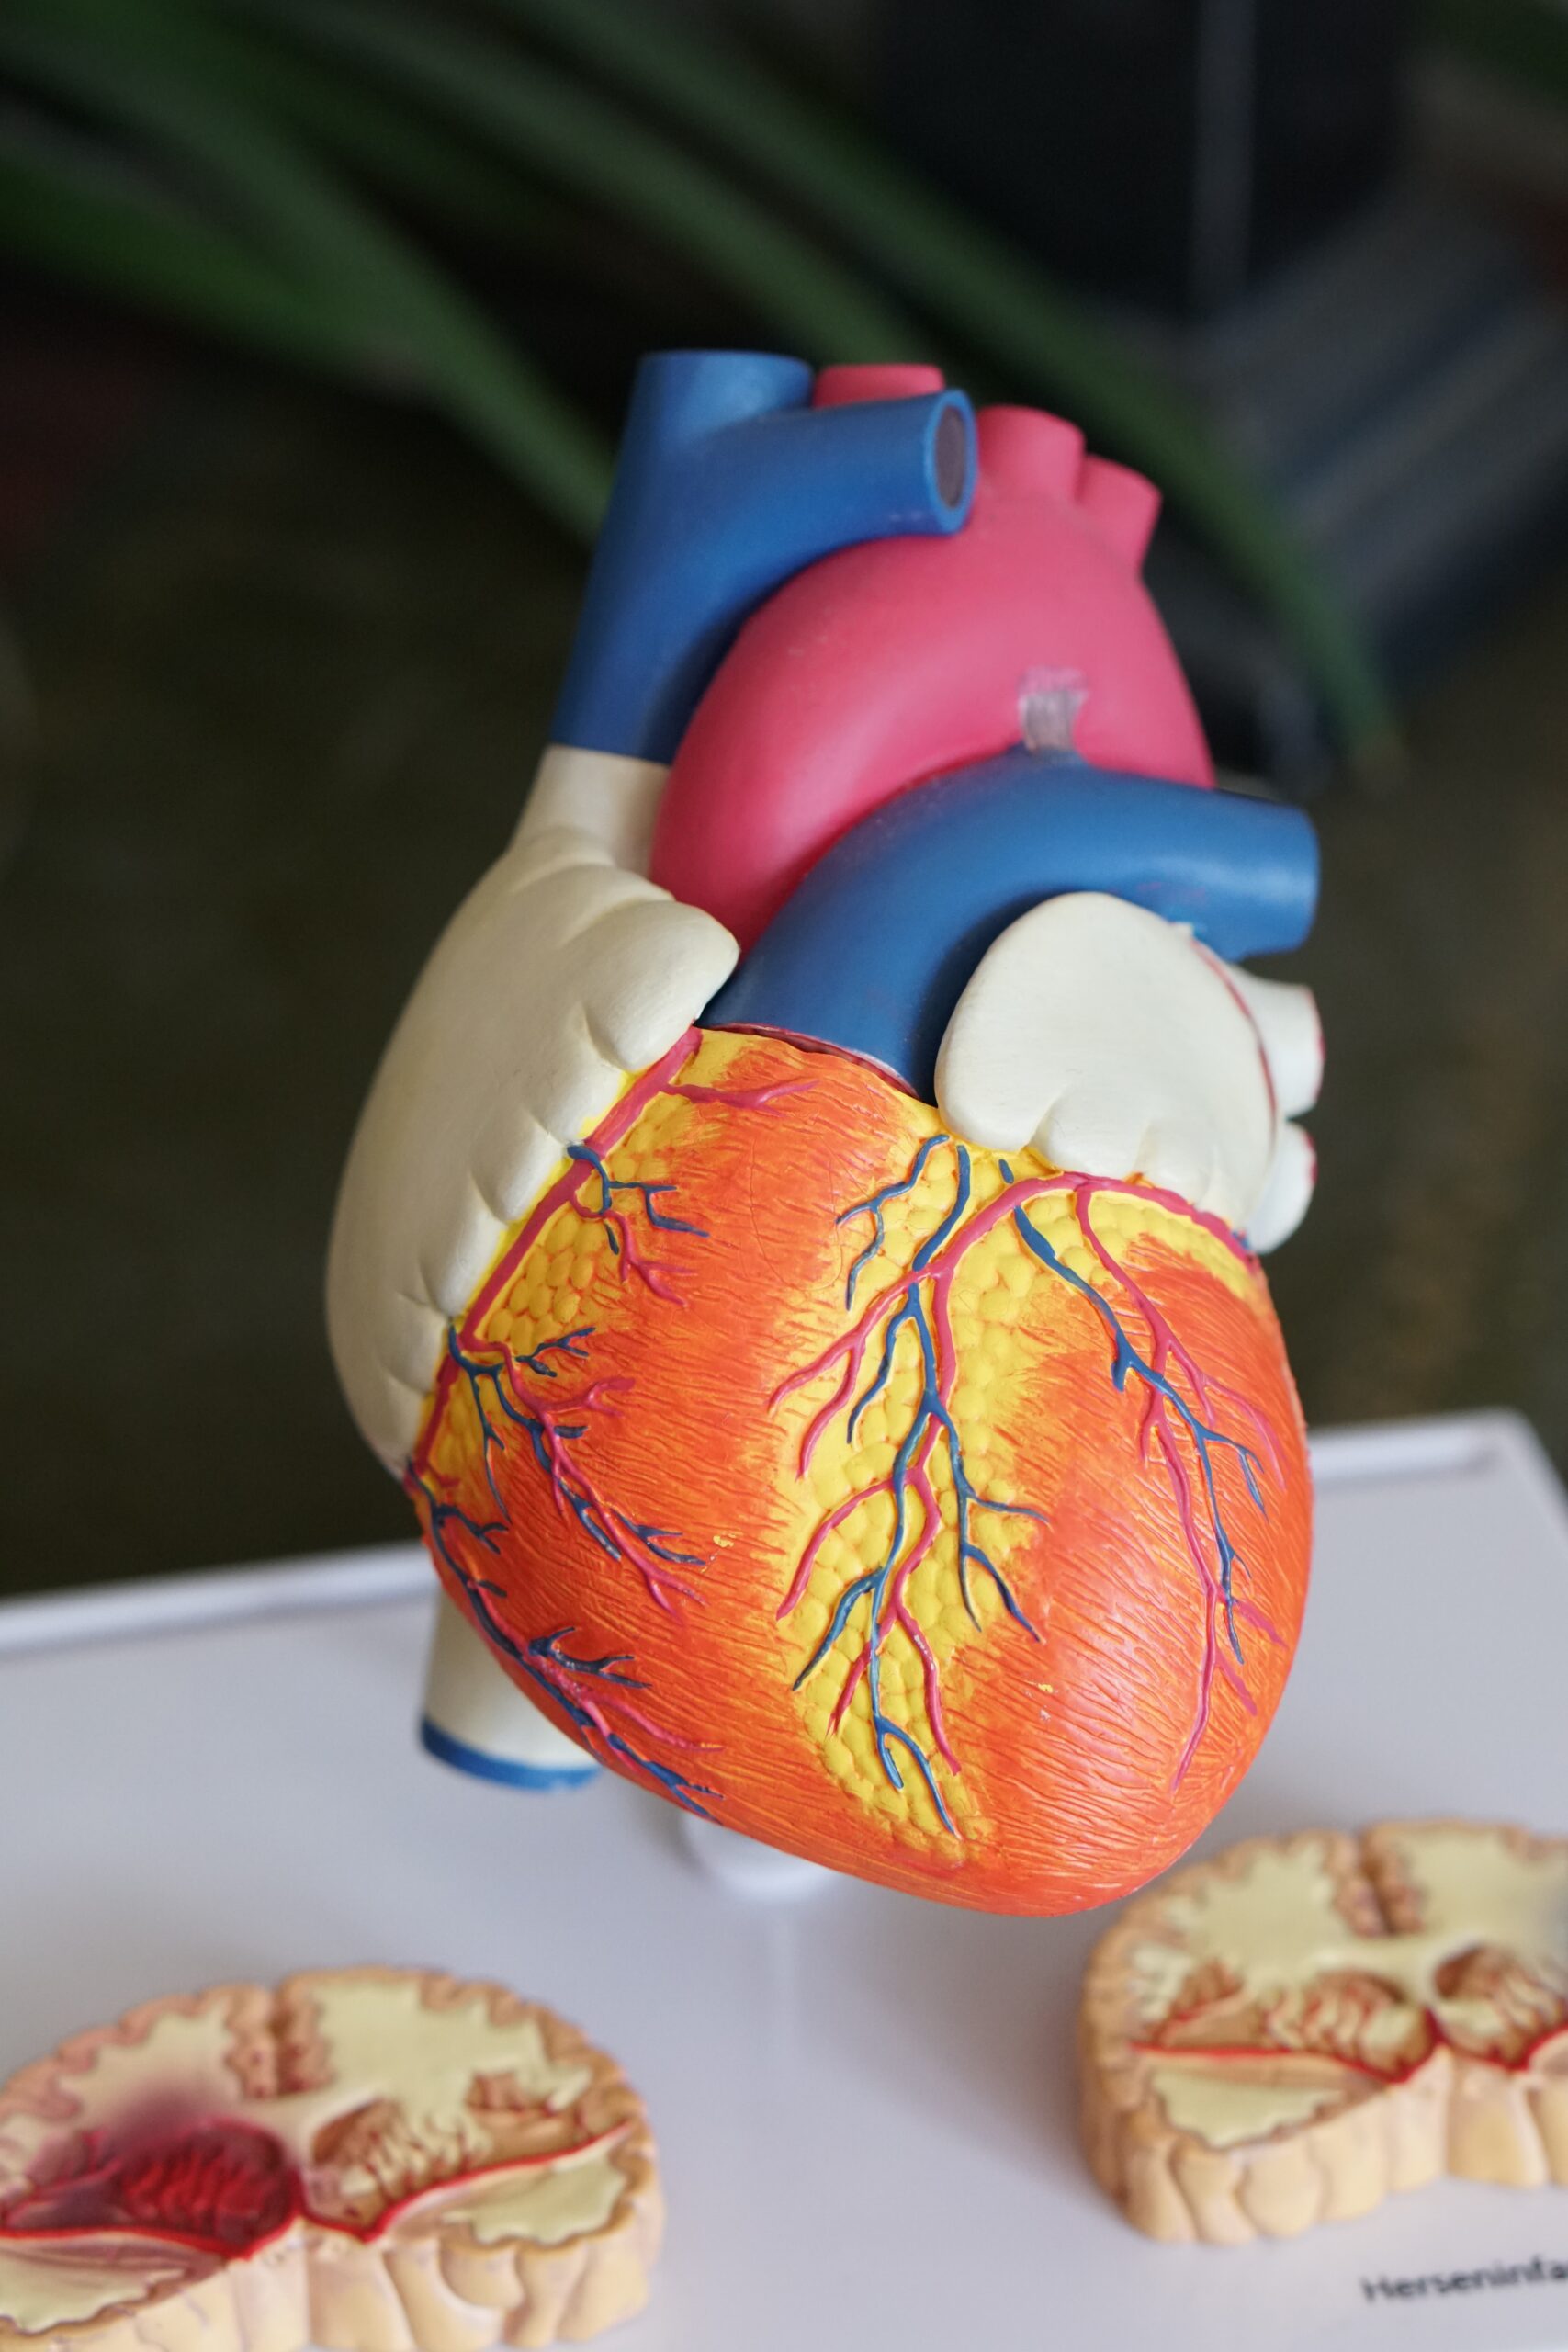 Implantable Heart Pump Prolongs Life in Heart Failure Patients